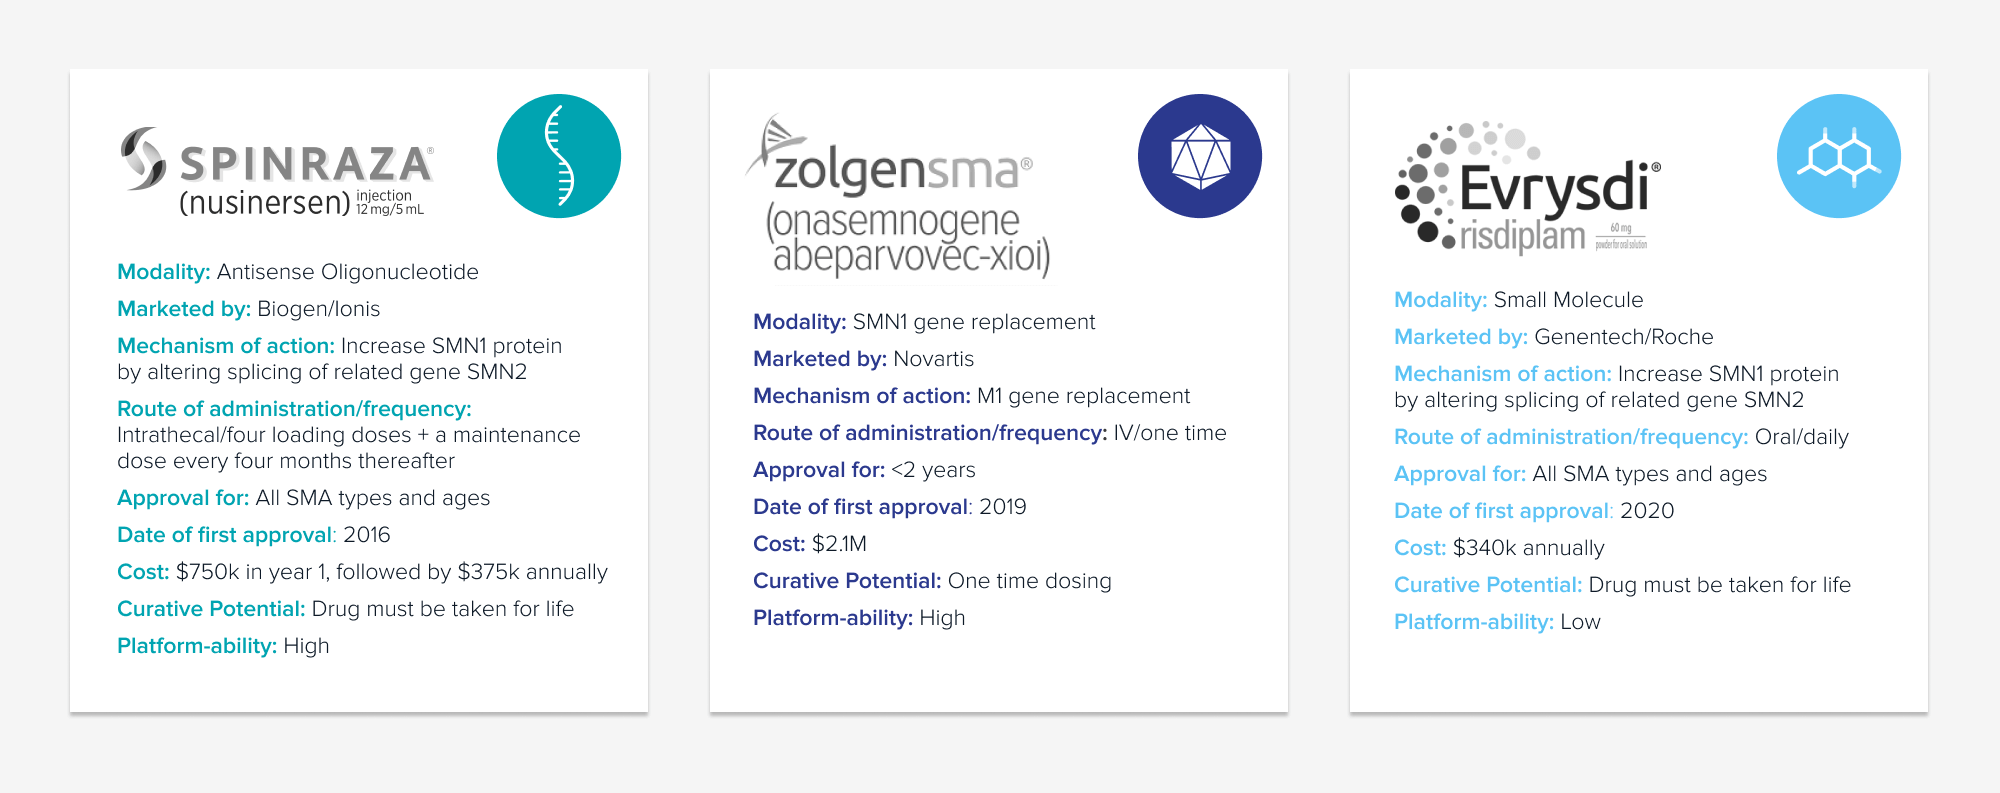 Comparison of Spinraza, Zolgensma, and Evrysdi